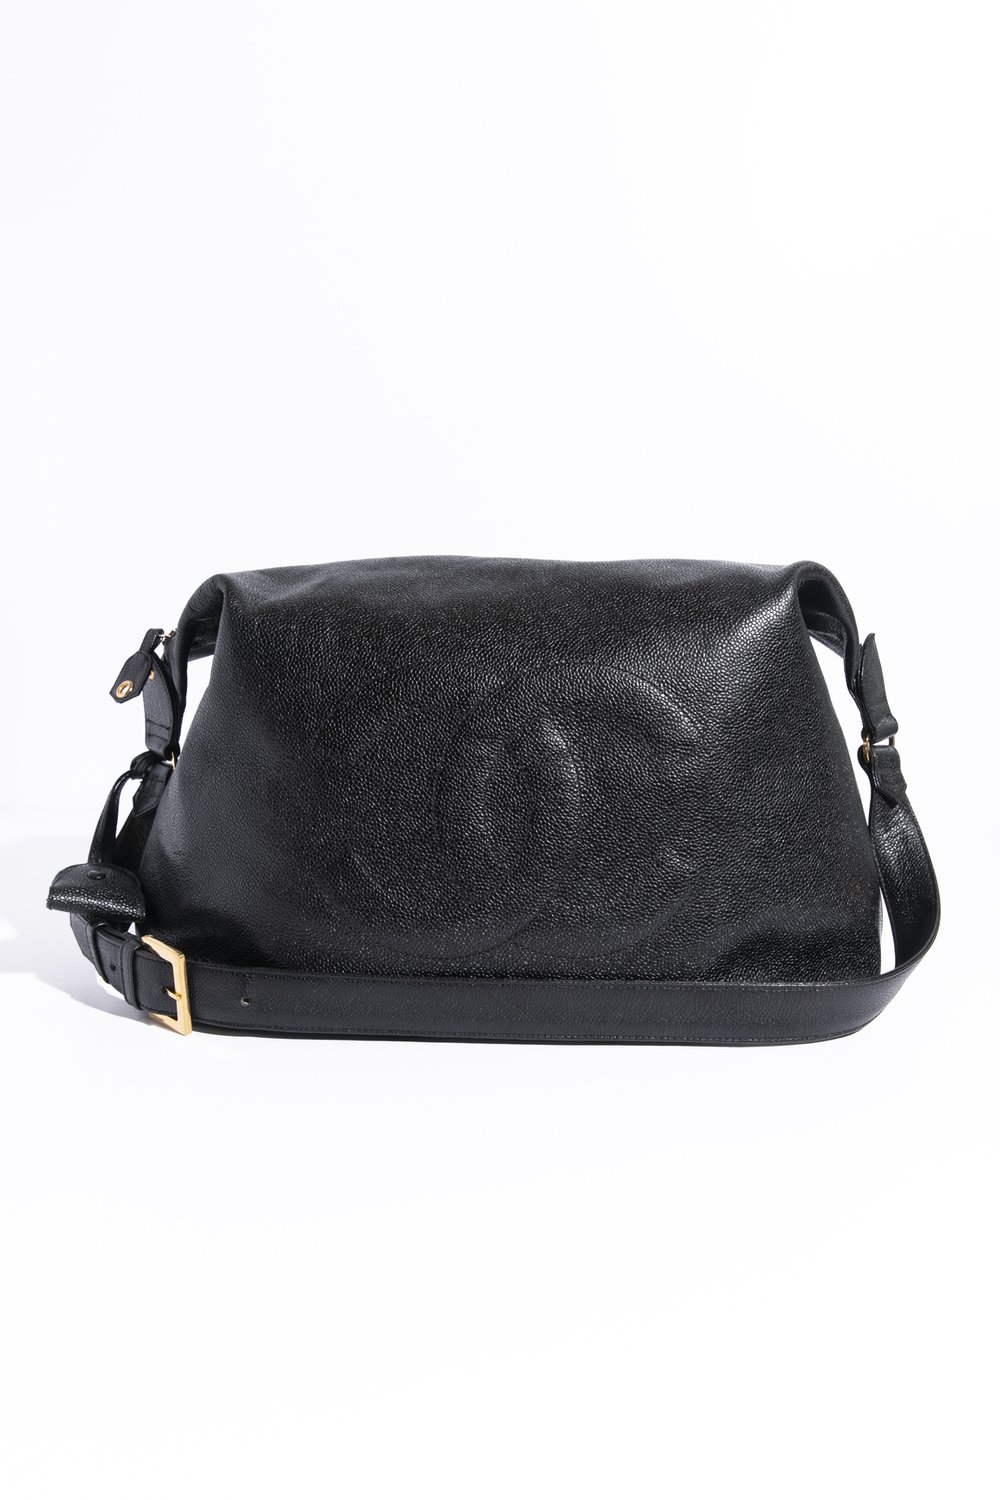 CHANEL 1994-1996 Black Caviar Leather Timeless Hobo Bag — Garment